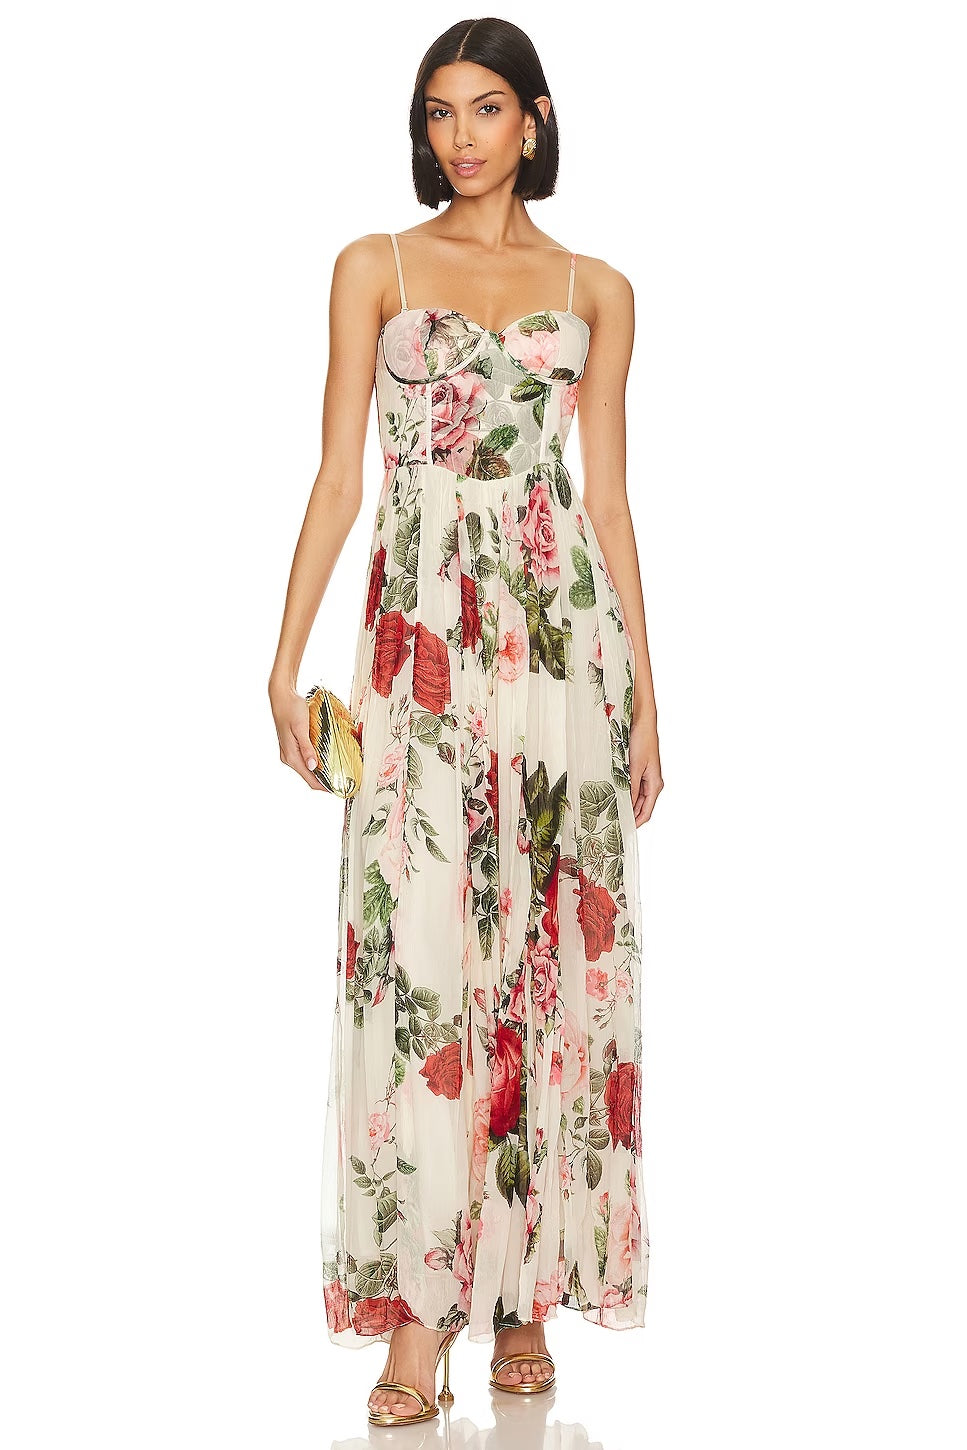 Hemant & Nandita Rose Print Long Dress, floral dress, dress, resort wear, women's clothing